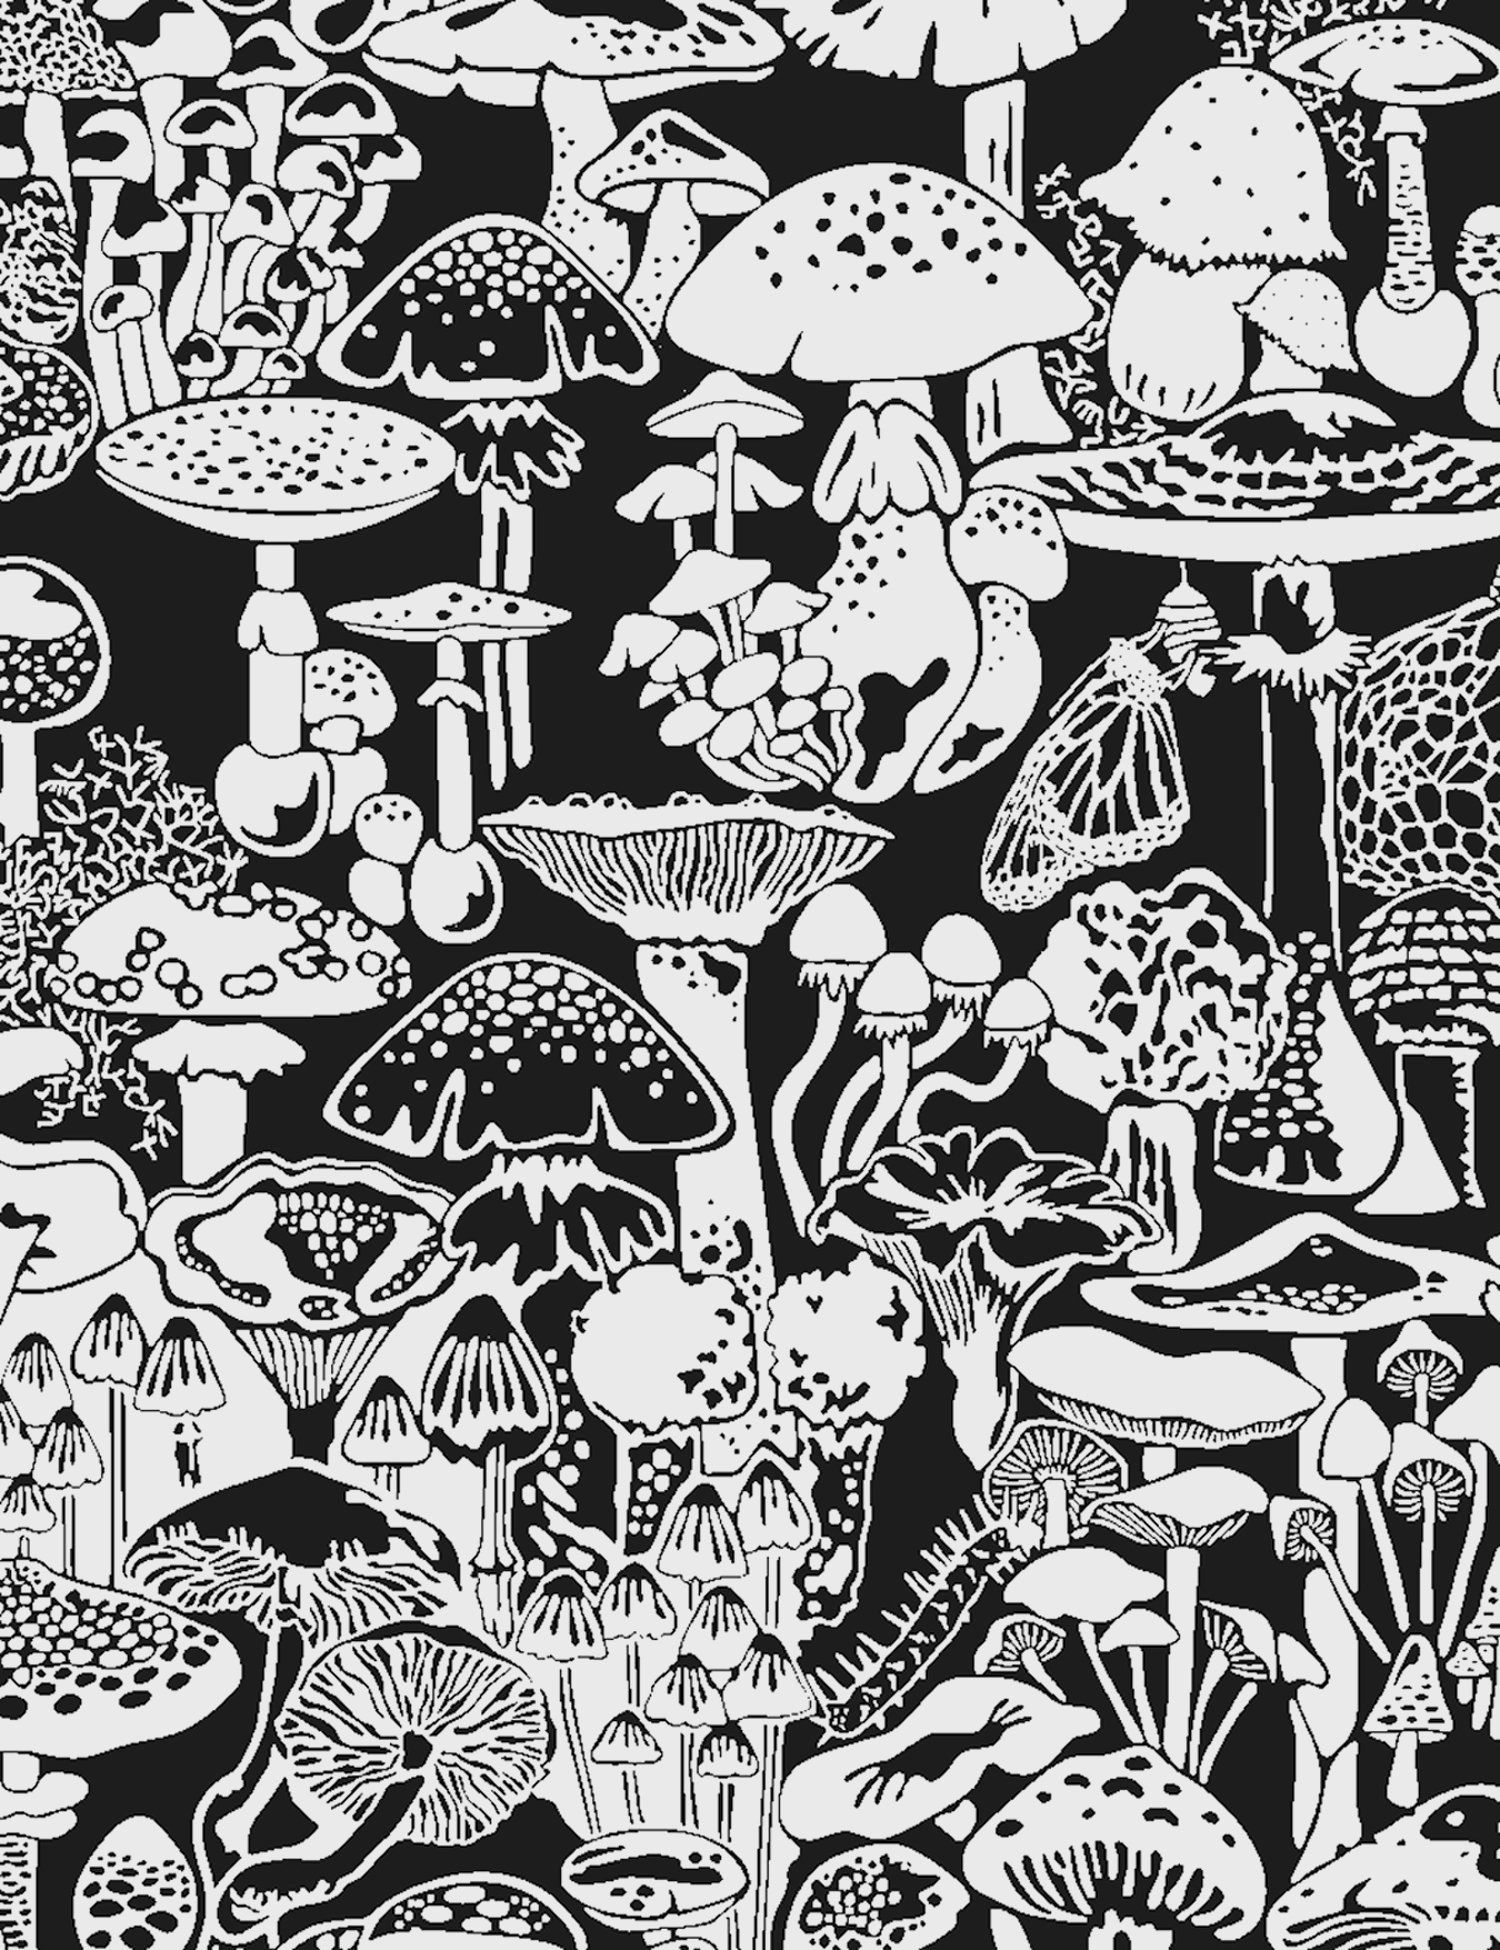 Mushroom City Contrast. Mushroom wallpaper, Stuffed mushrooms, Trippy patterns